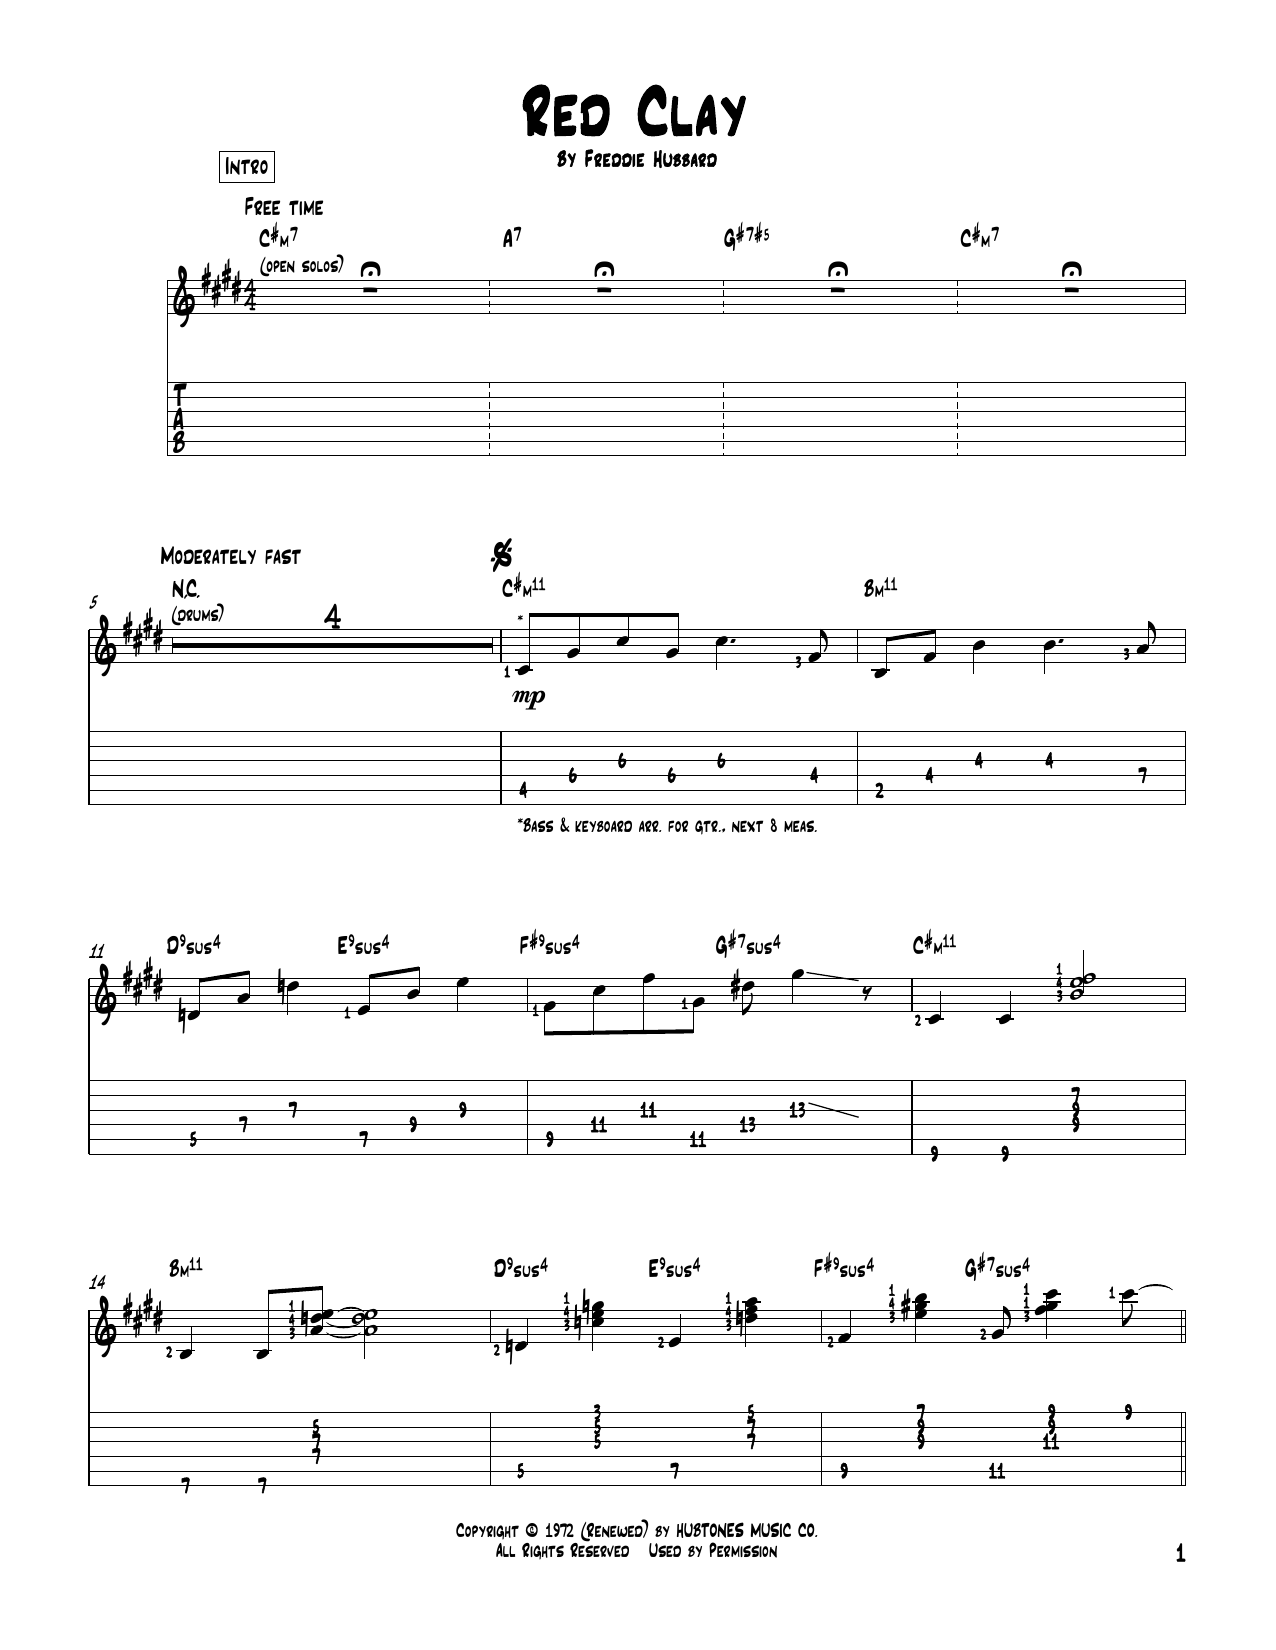 Hubbard "Red Clay" Sheet Music PDF Notes, Chords | Jazz Score Guitar Tab Download